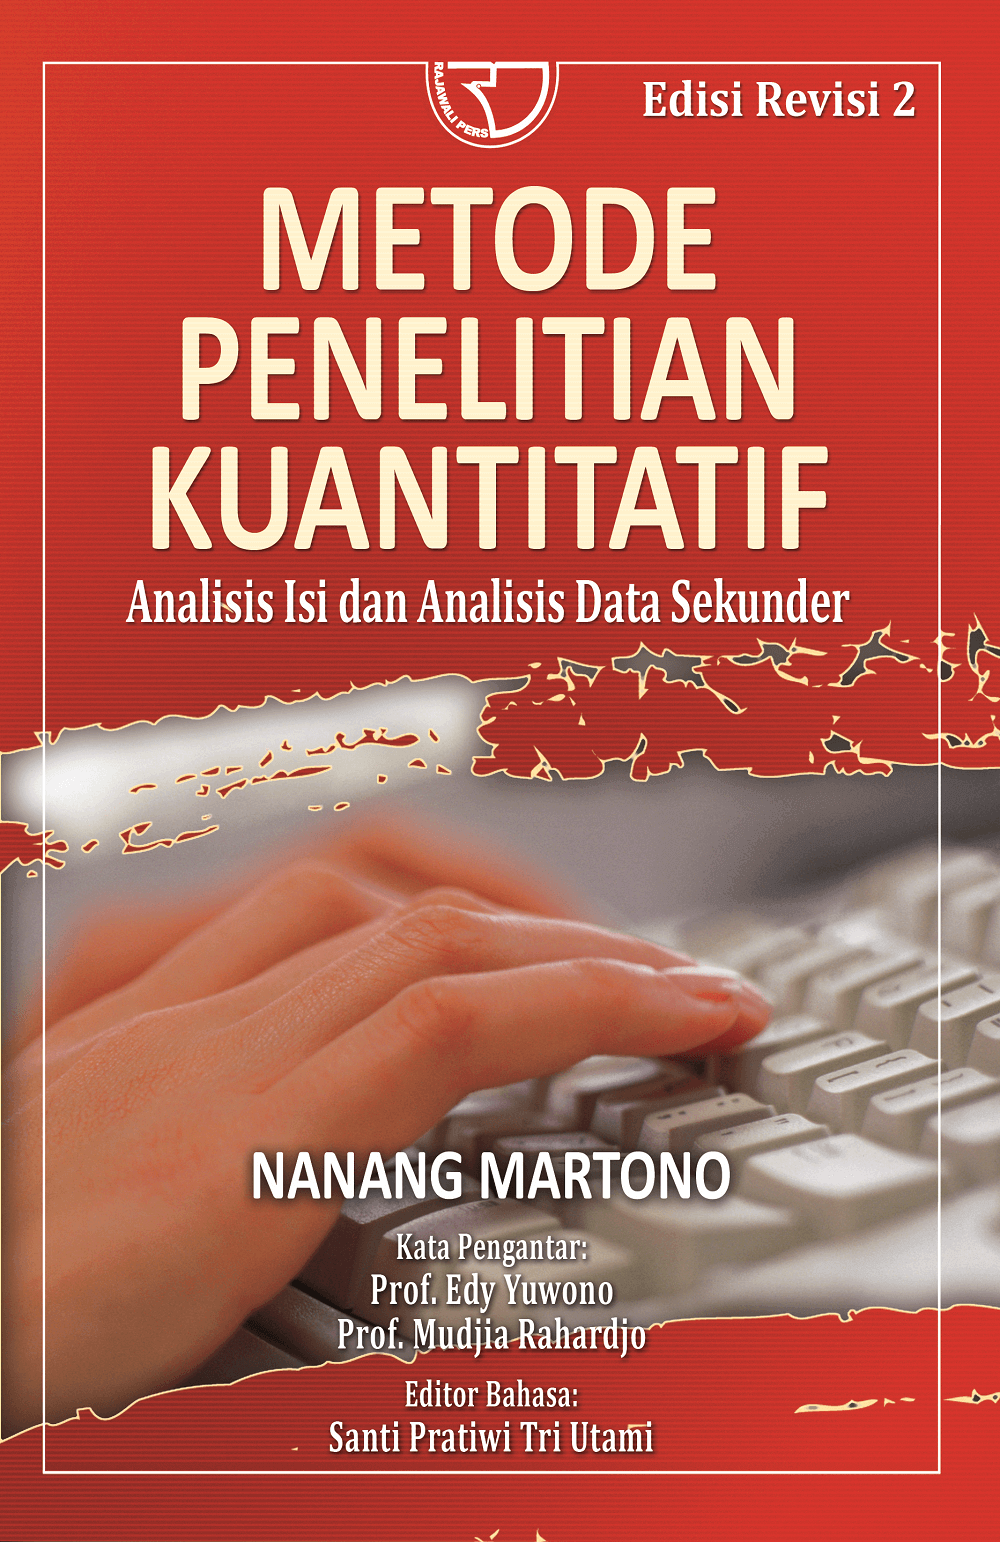 Download Buku Metode Penelitian Kualitatif Moleong Pdf